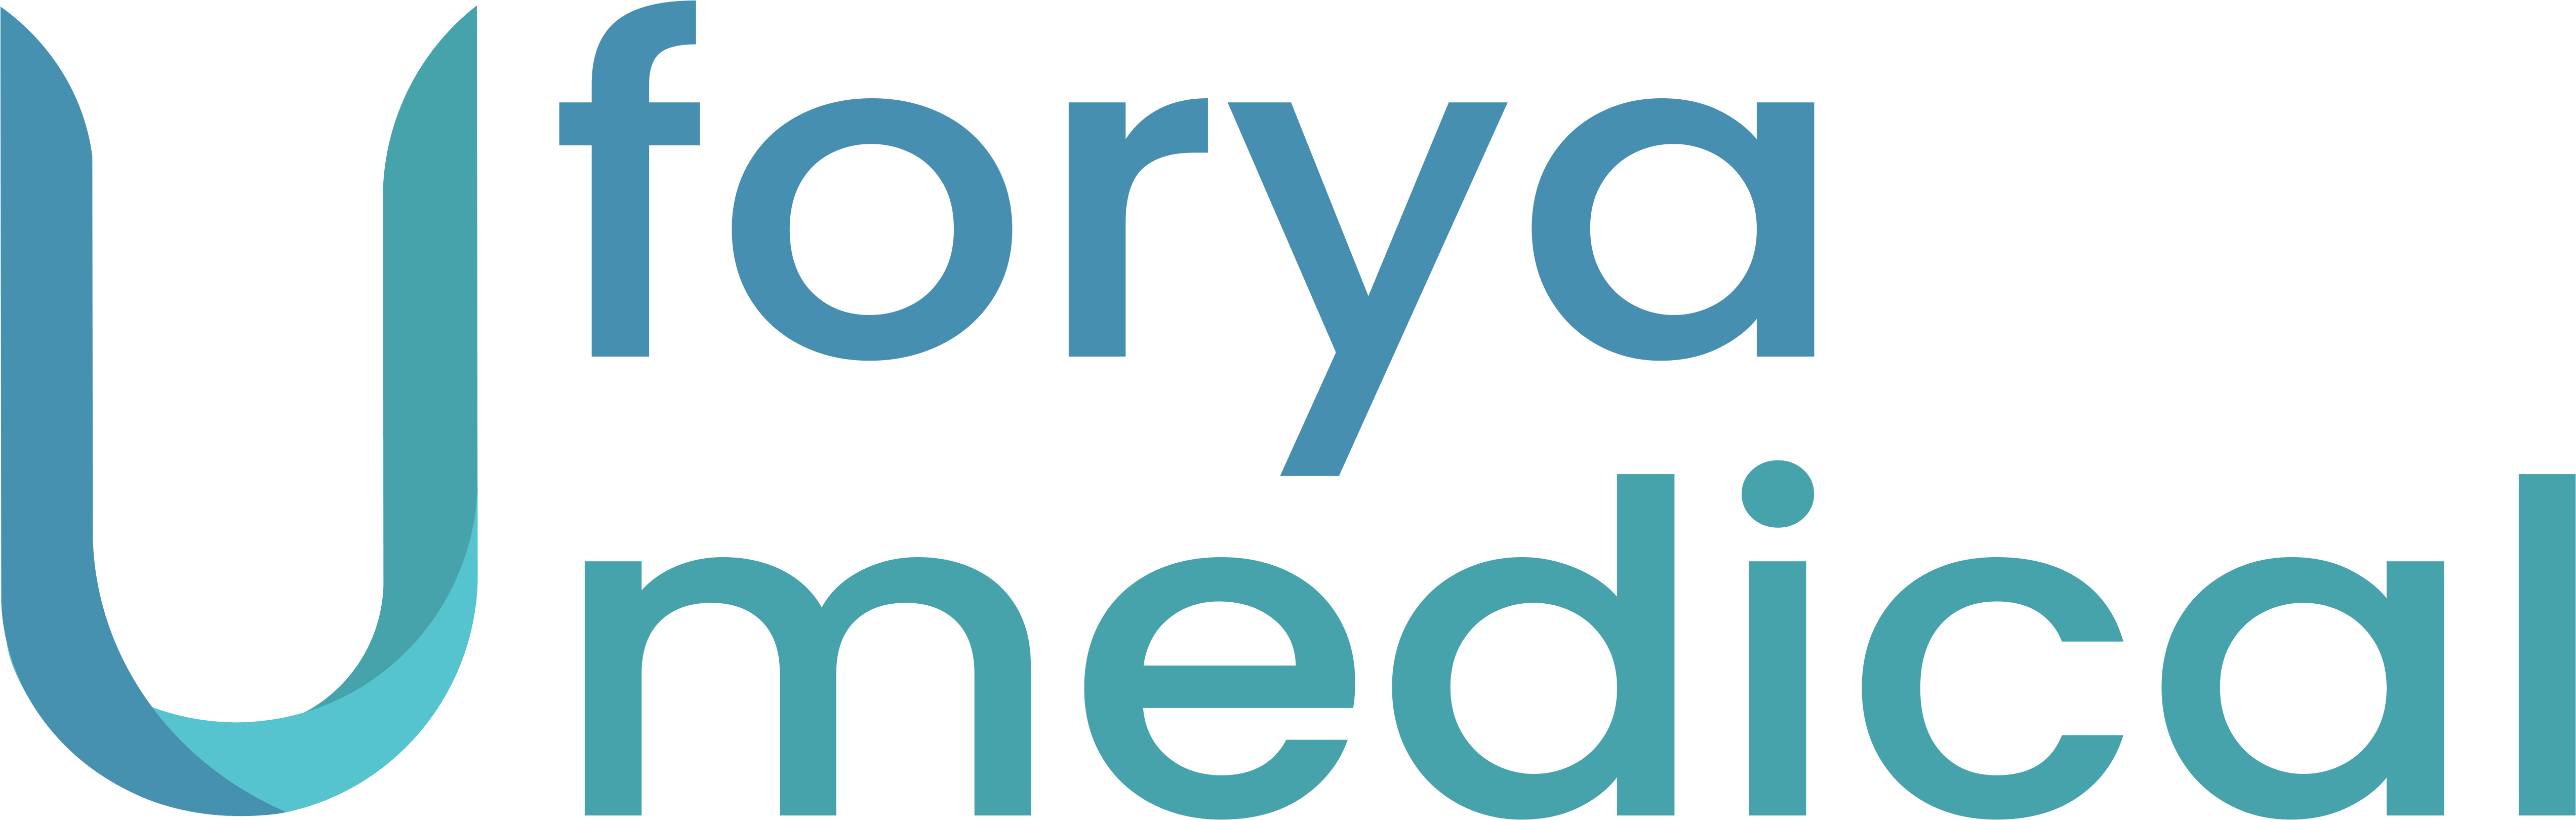 Uforya Medical